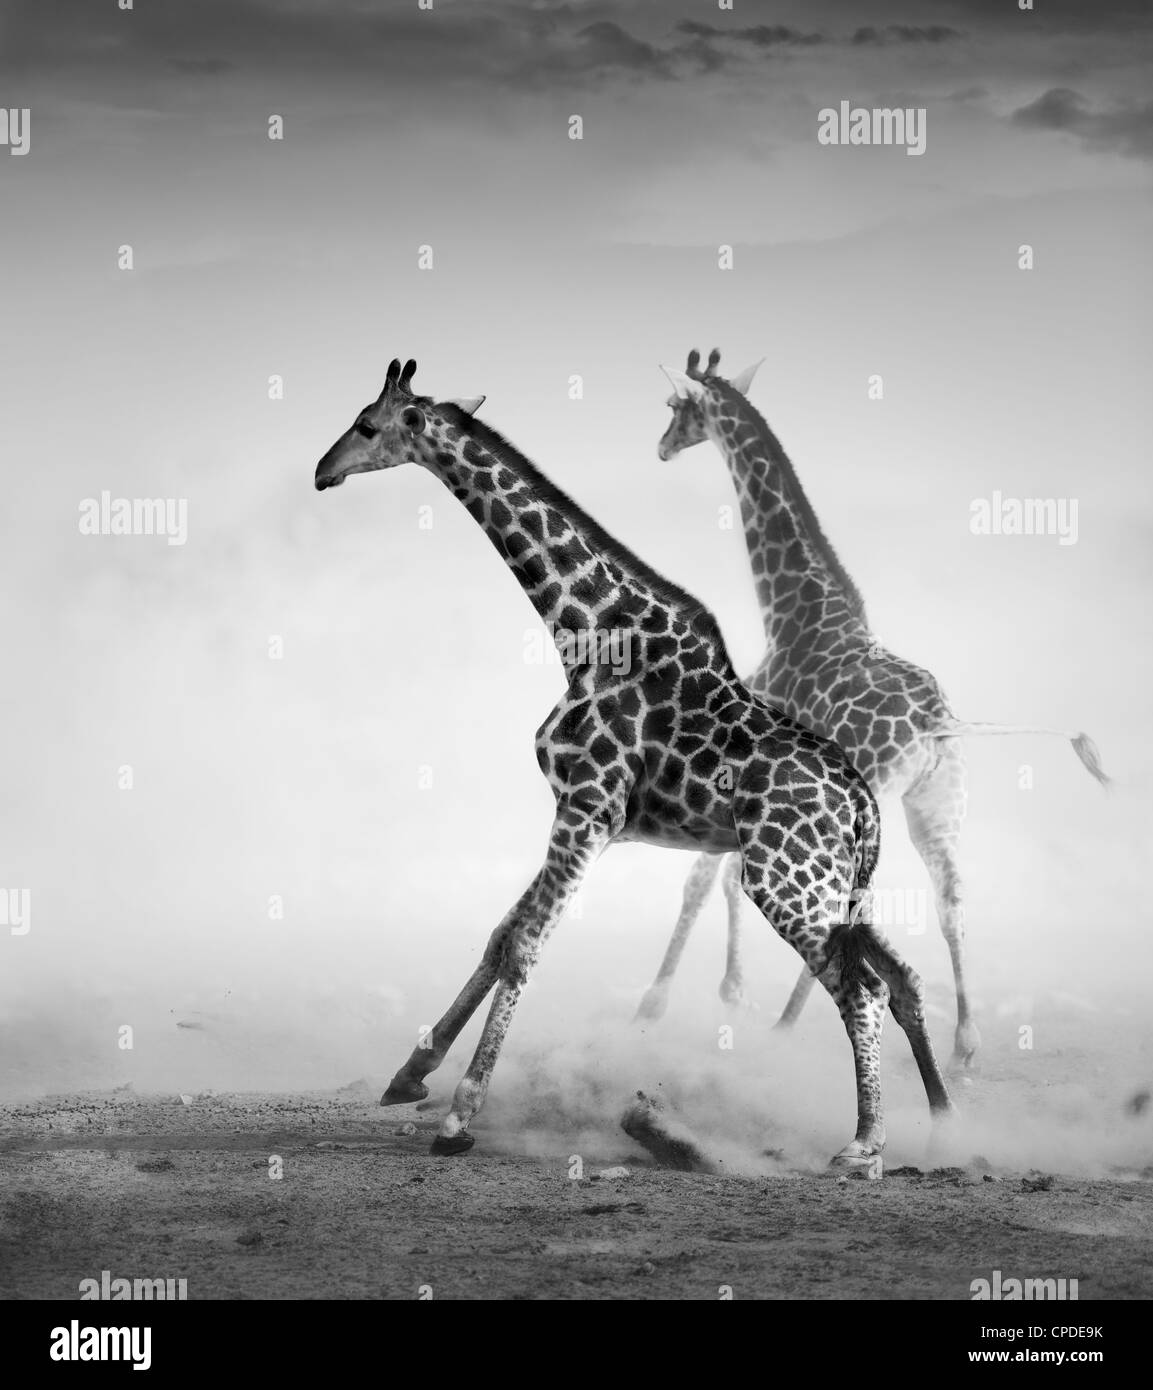 Giraffes on the run (Artistic processing) Stock Photo